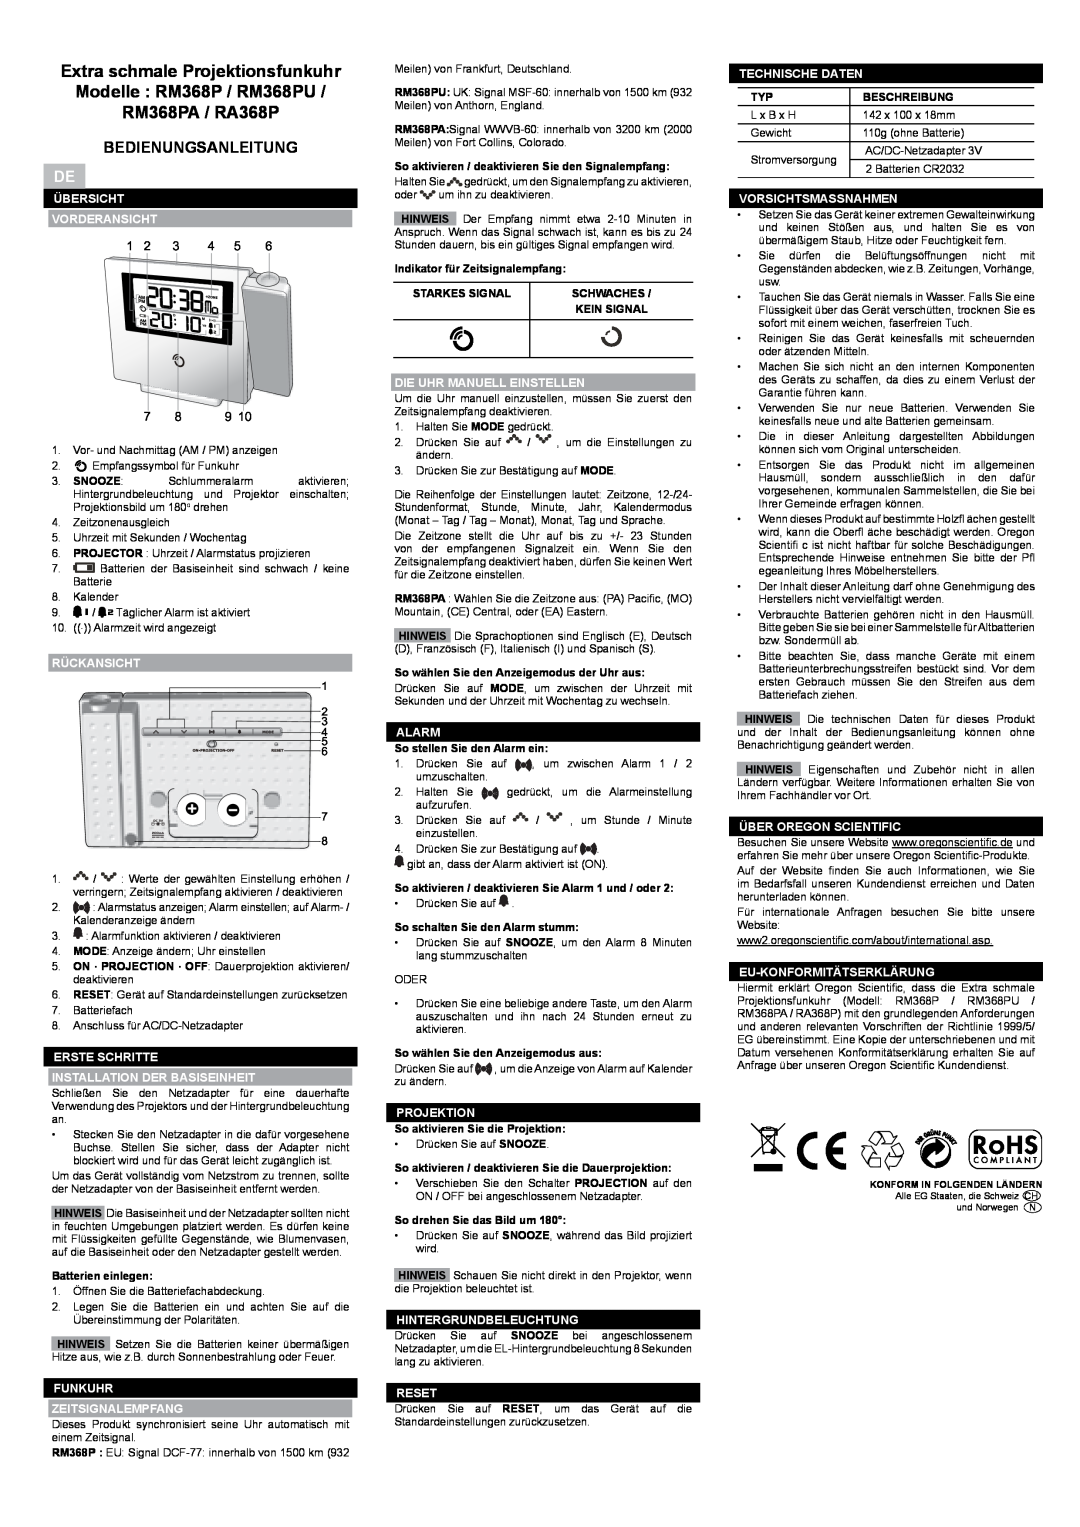 Oregon user manual Extra schmale Projektionsfunkuhr Modelle RM368P / RM368PU, Bedienungsanleitung, RM368PA / RA368P 